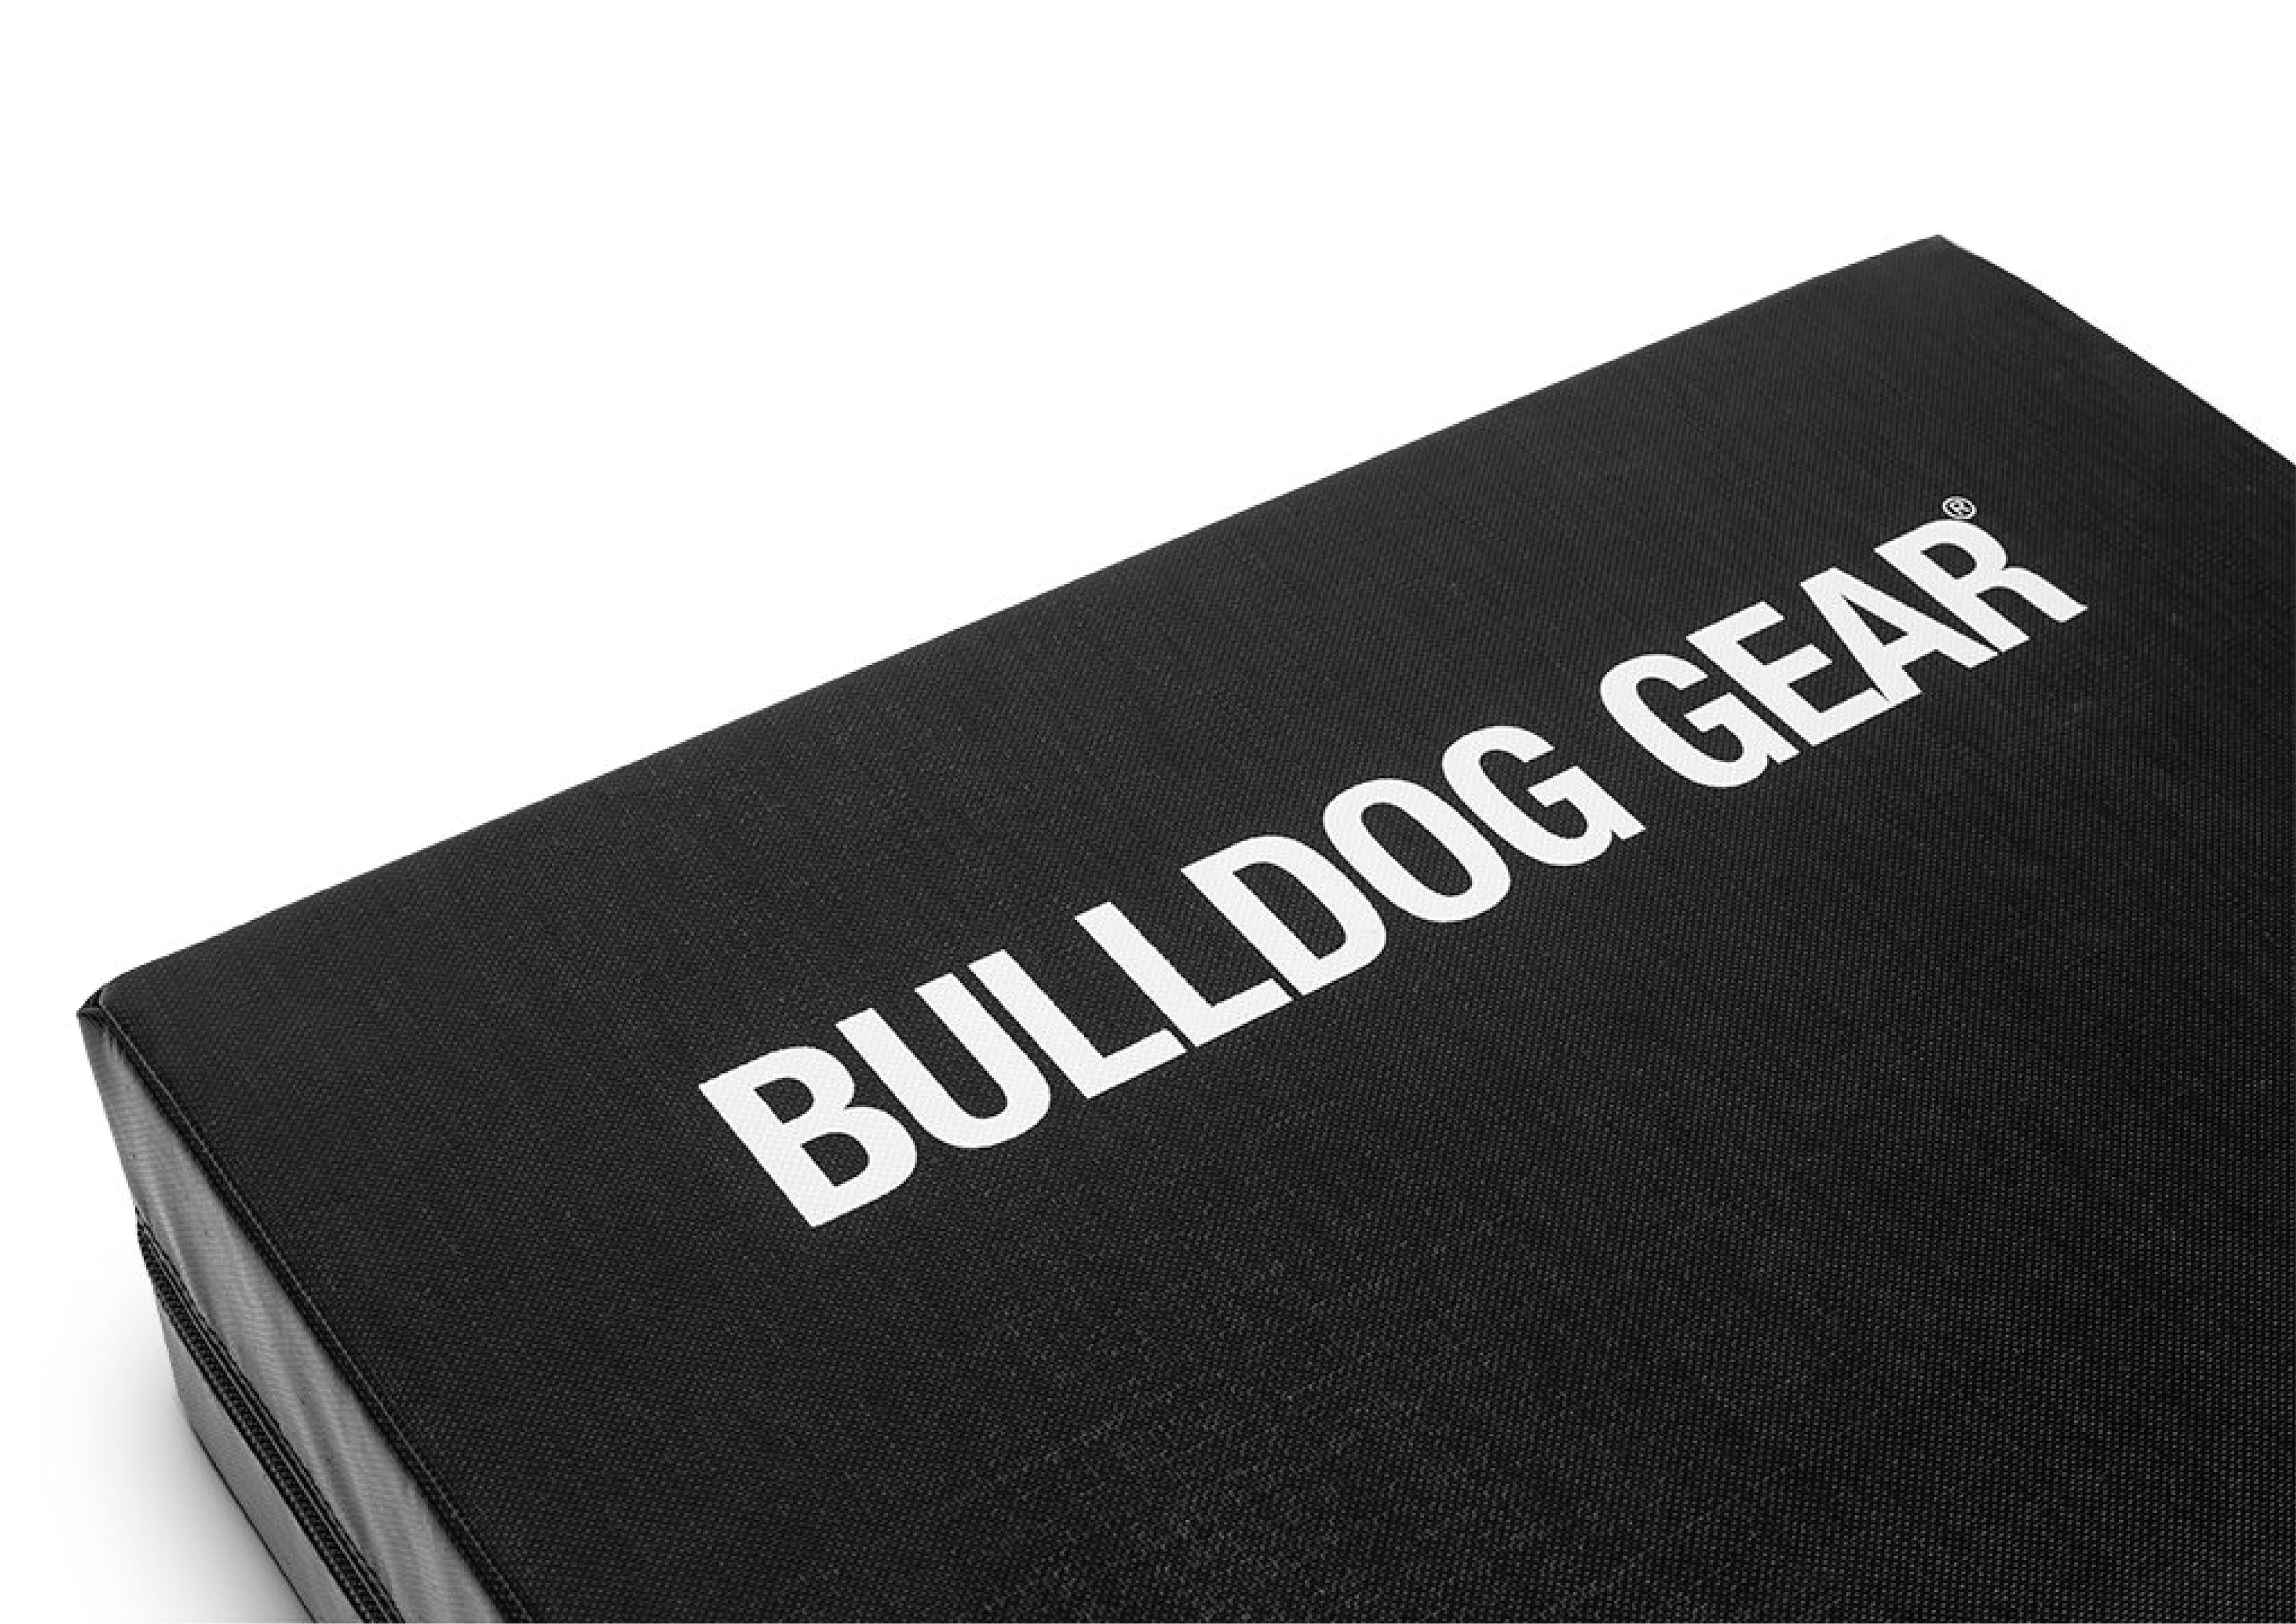 Bulldog Gear weight lifting drop pad branding